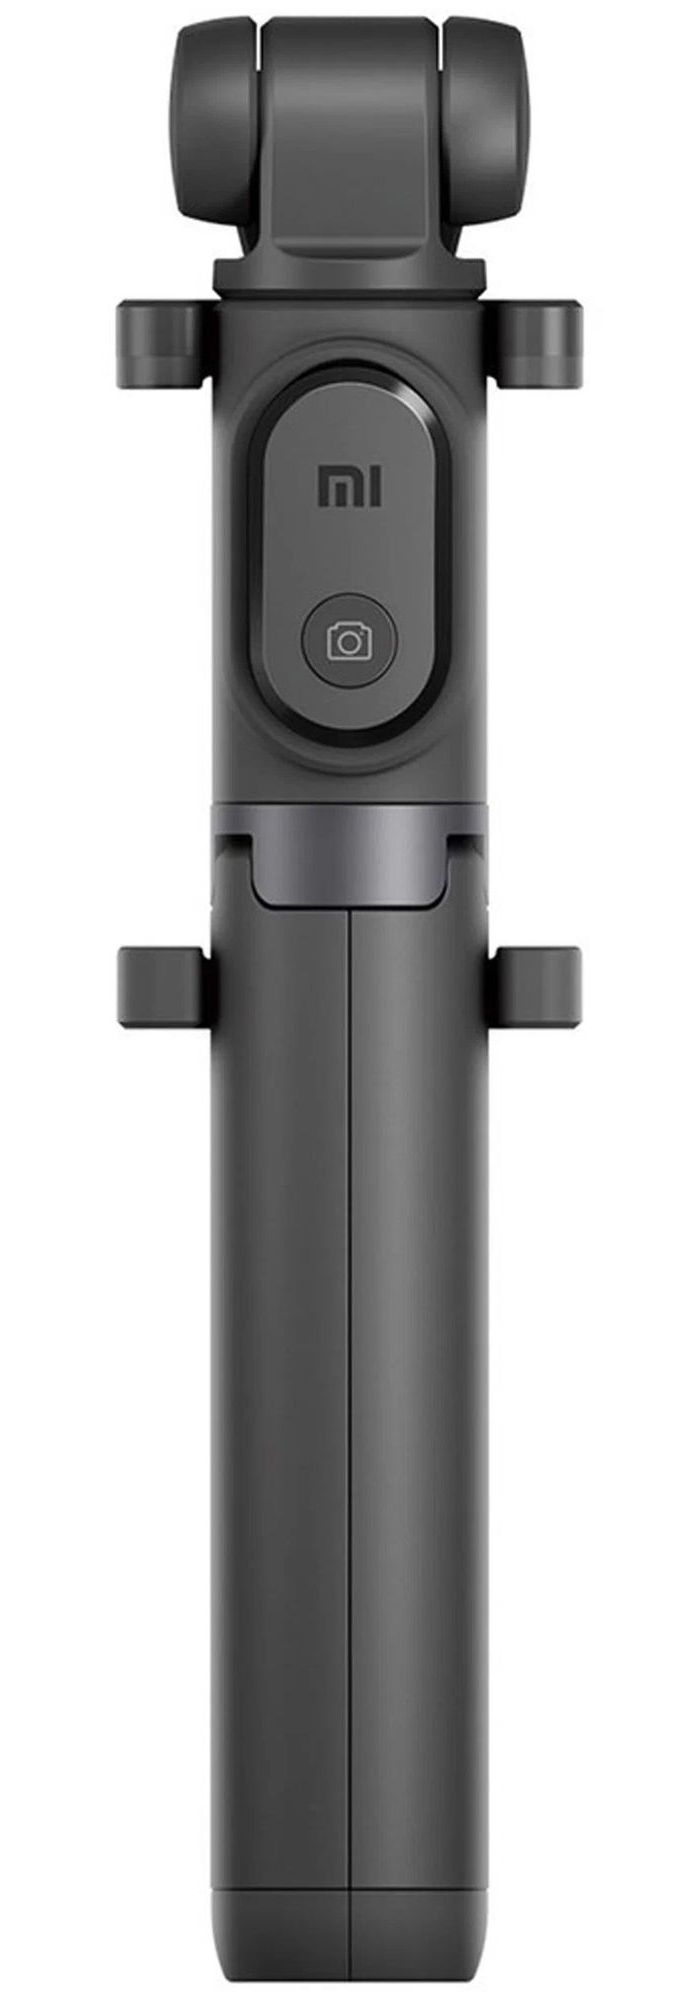 Монопод Xiaomi Mi Selfie Stick Tripod Black (XMZPG01YM) монопод xiaomi mi selfie stick black fba4070us